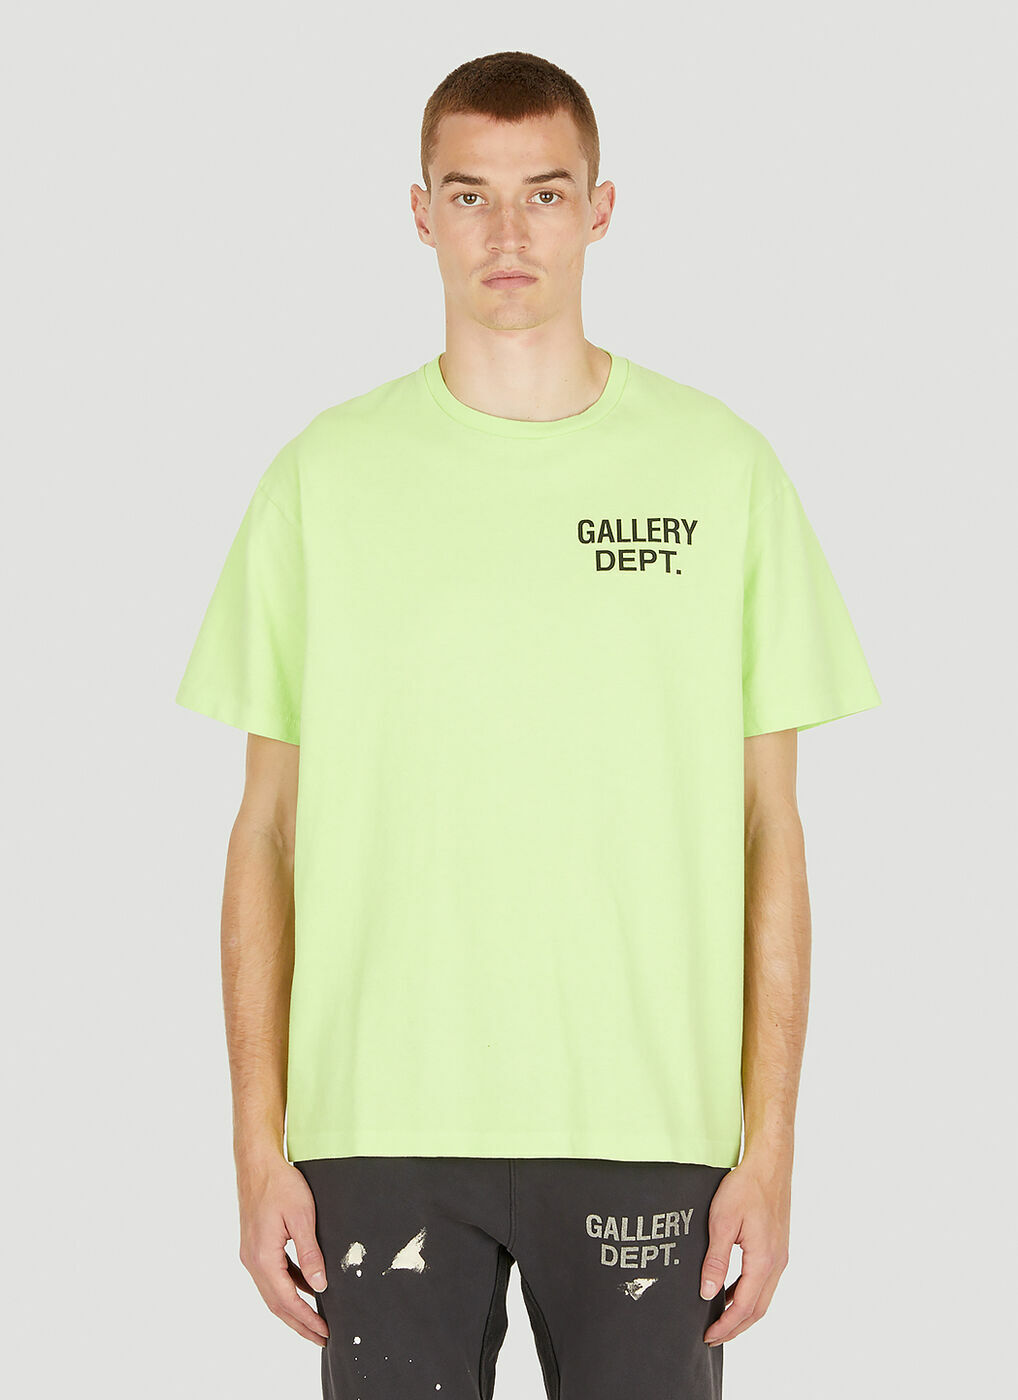 Souvenir T-Shirt in Lime Green Gallery Dept.